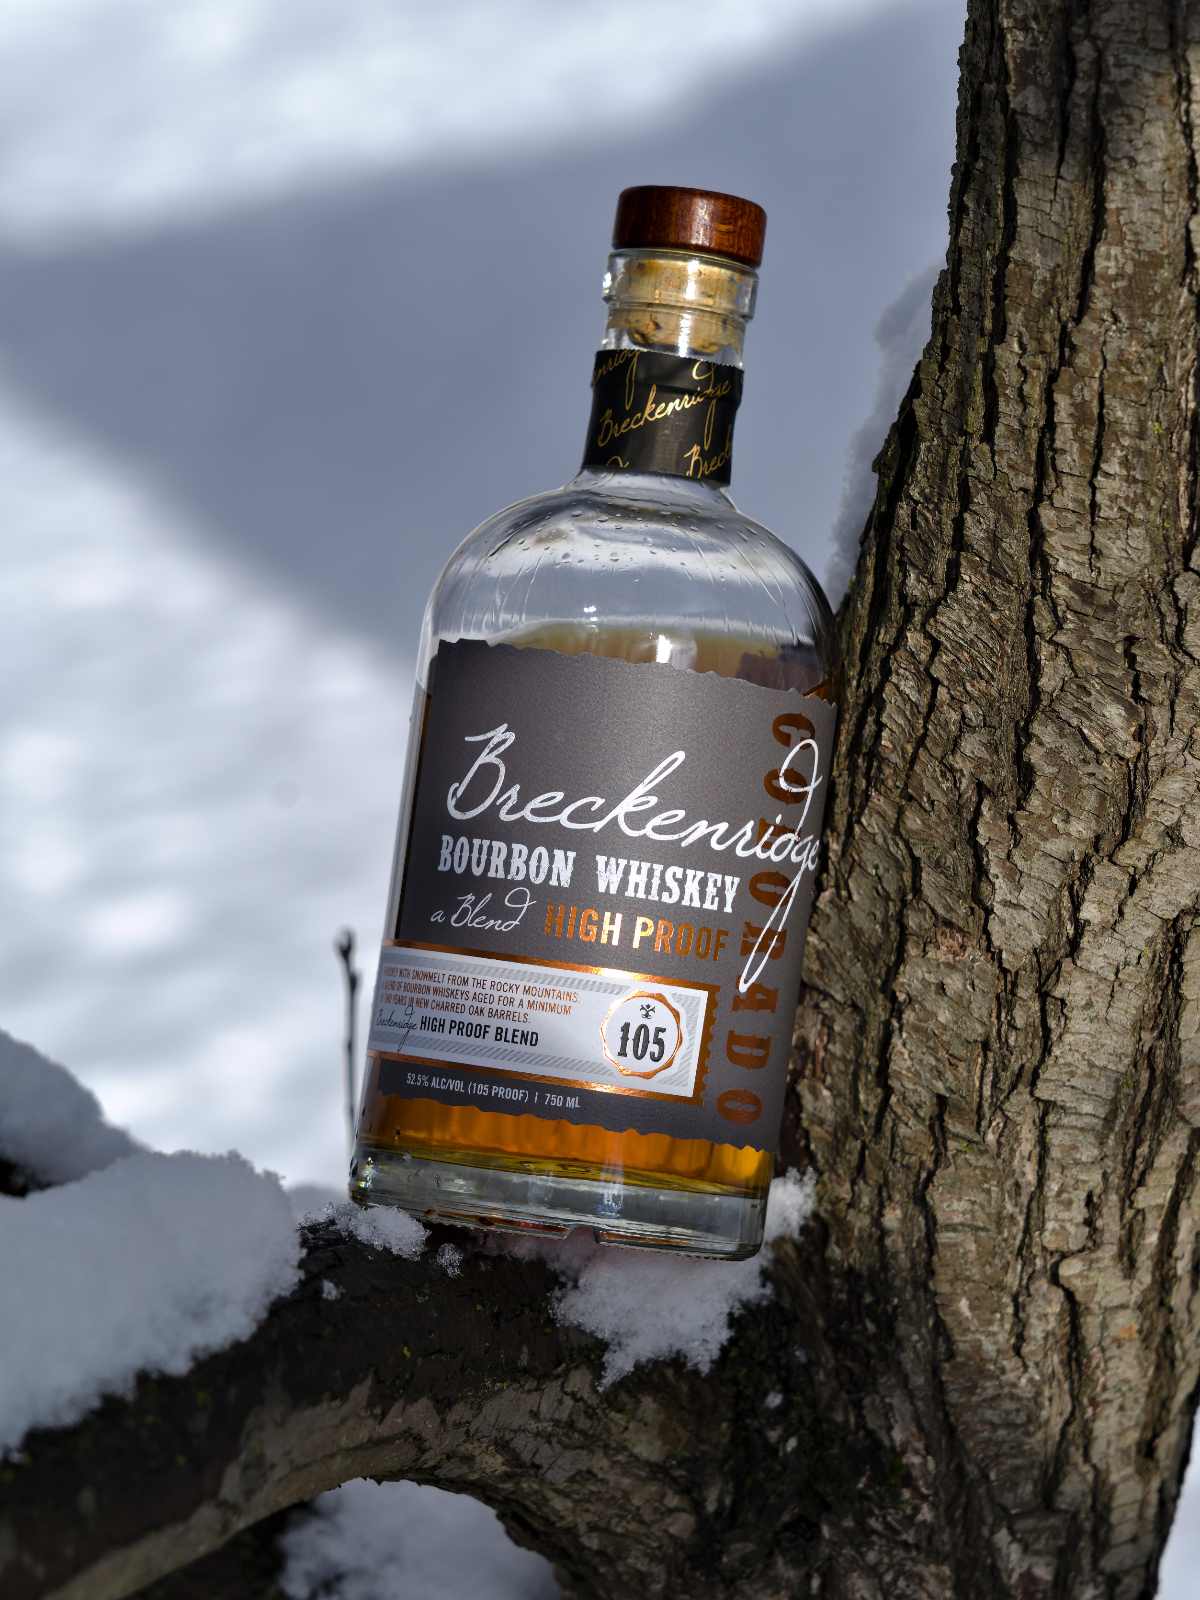 breckenridge high proof bourbon featured